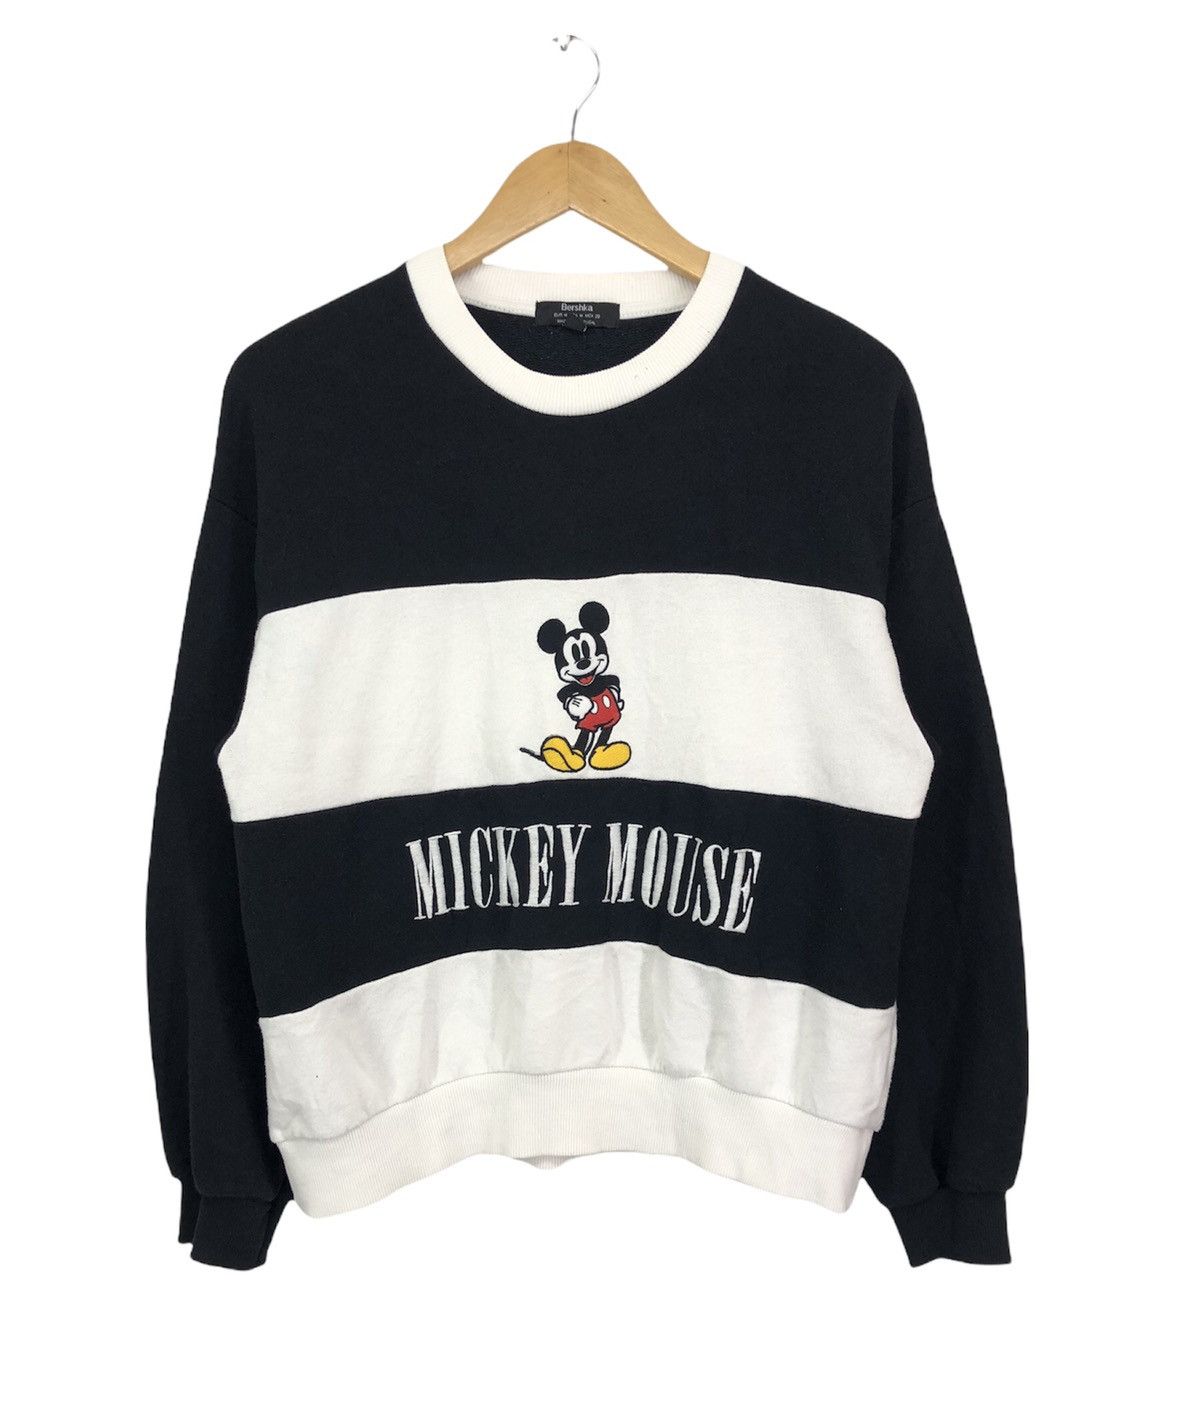 Bershka Bershka x Mickey Mouse Embroidery Logo Sweatshirt | Grailed